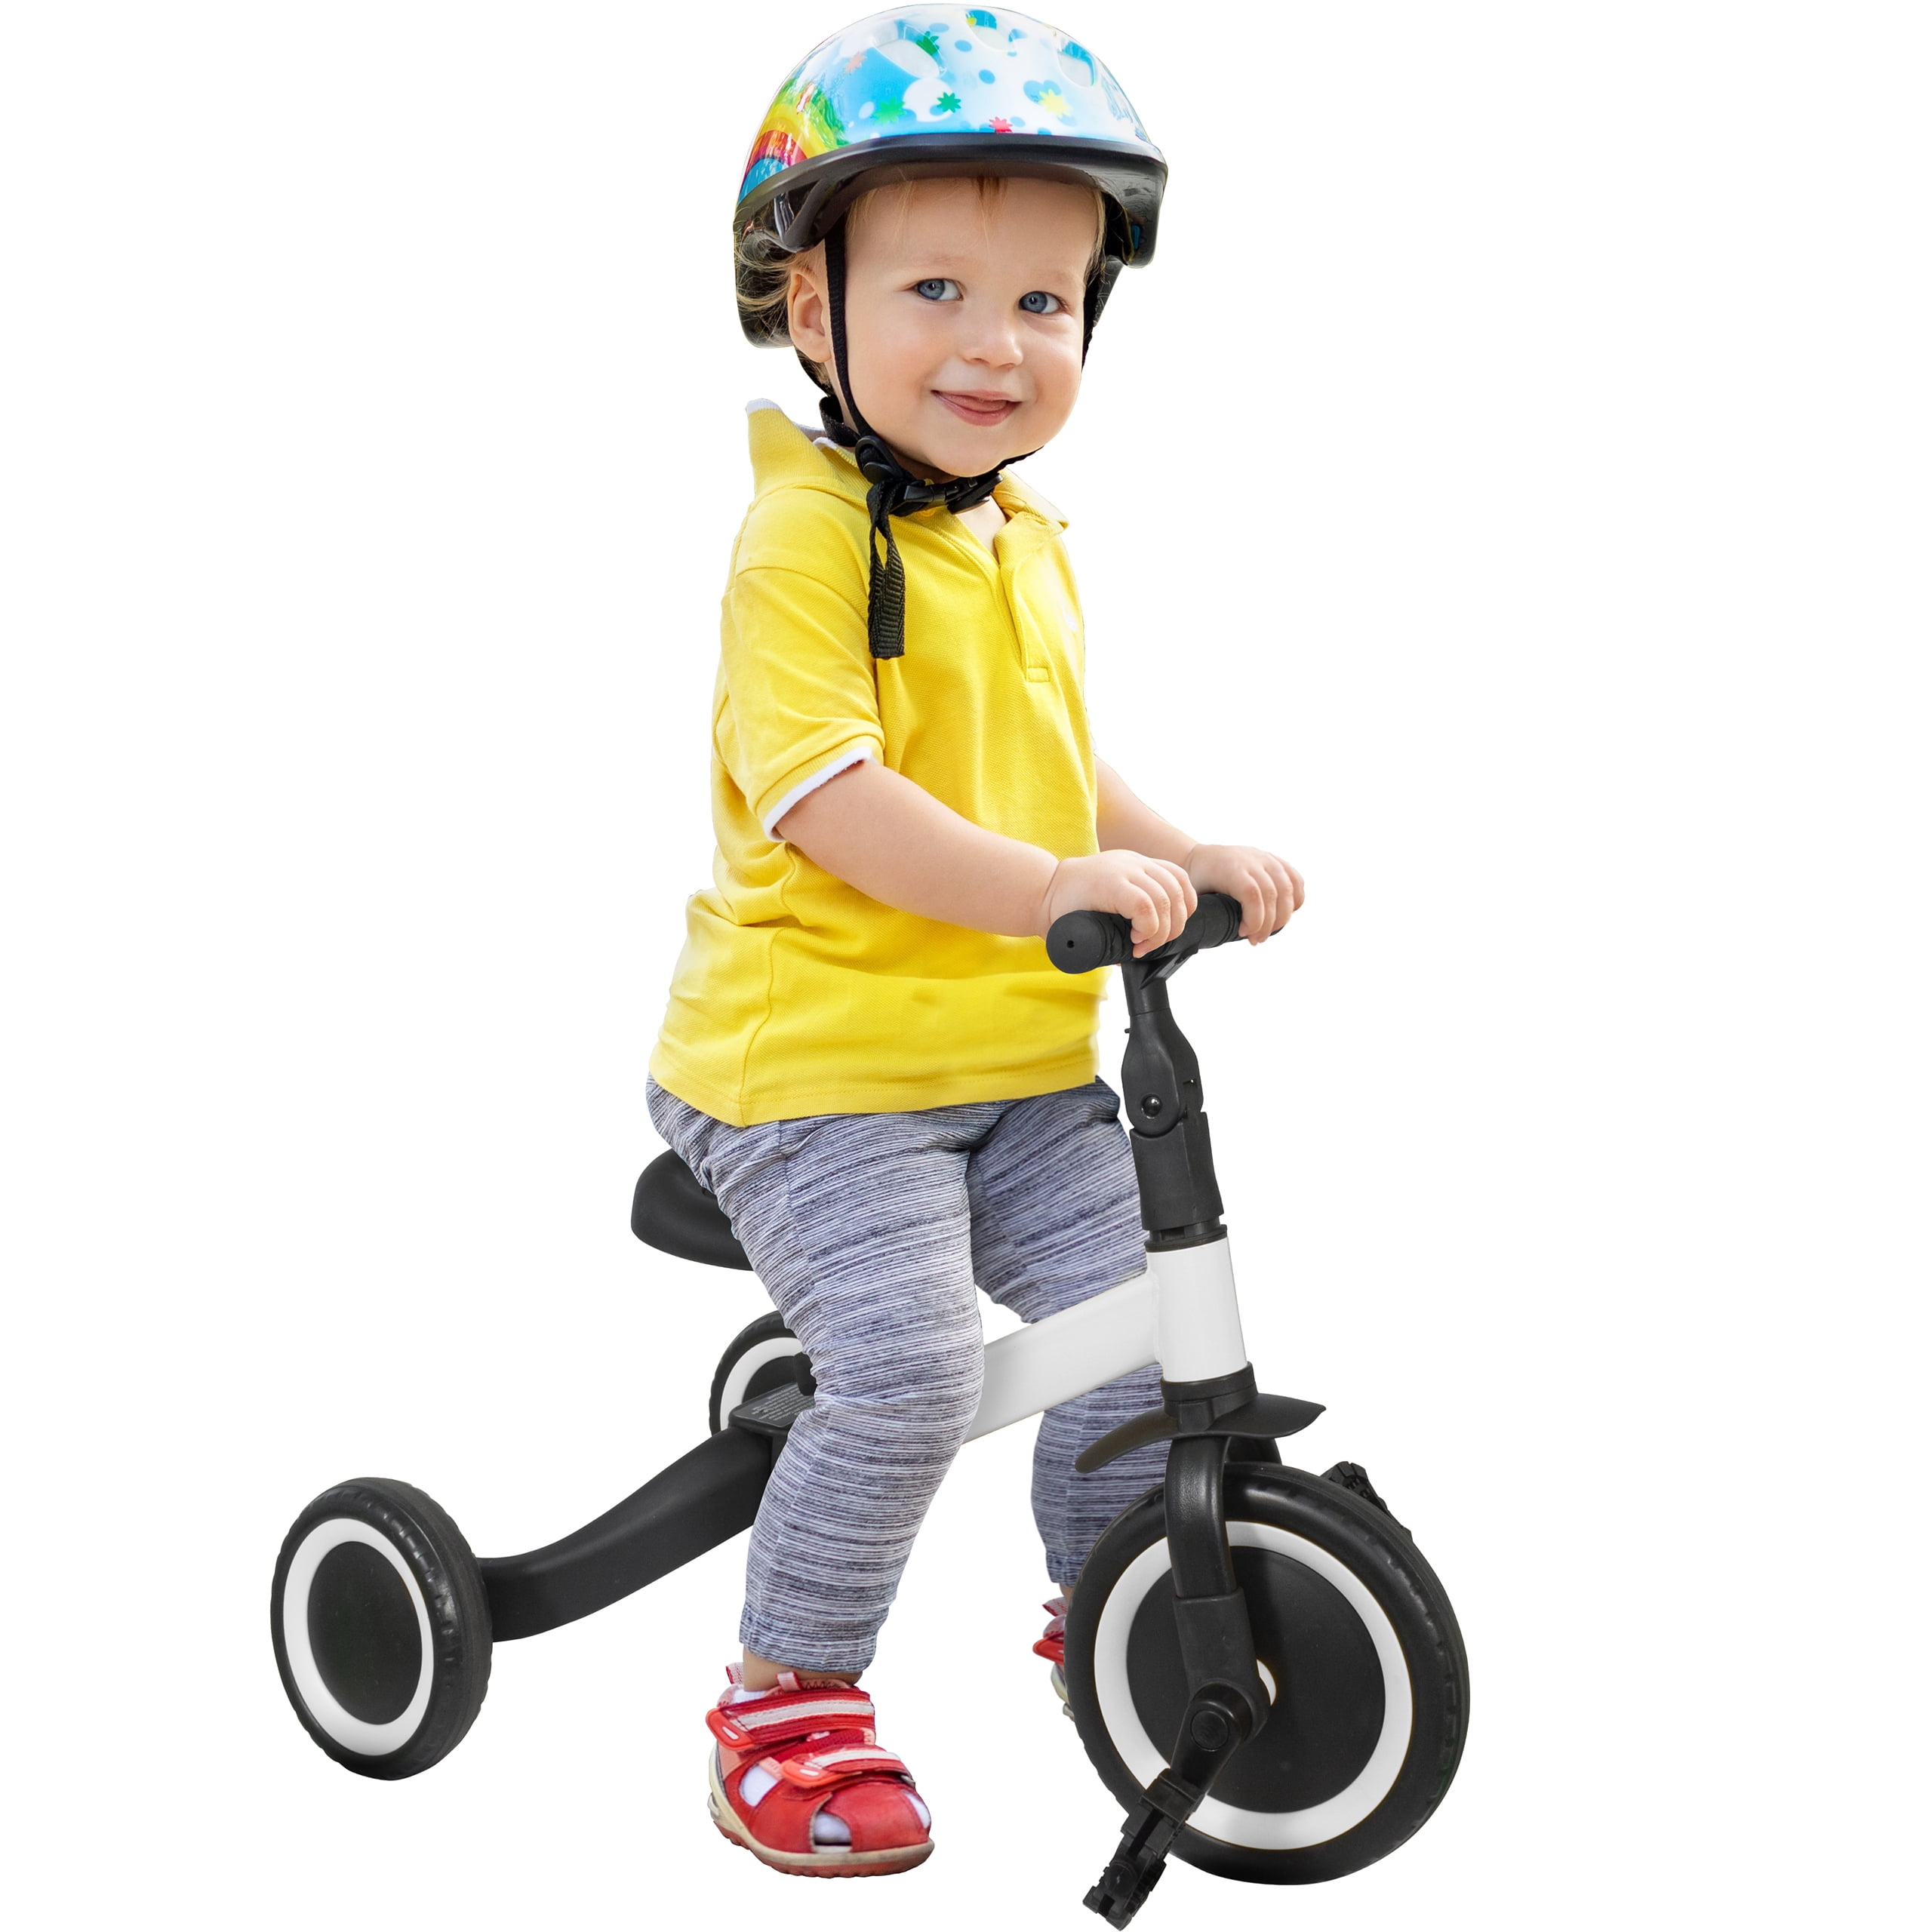 Kids Trike Bike Toy For toddler Boys Age 3 4 5 6 7 year old Easy-grip handlebars